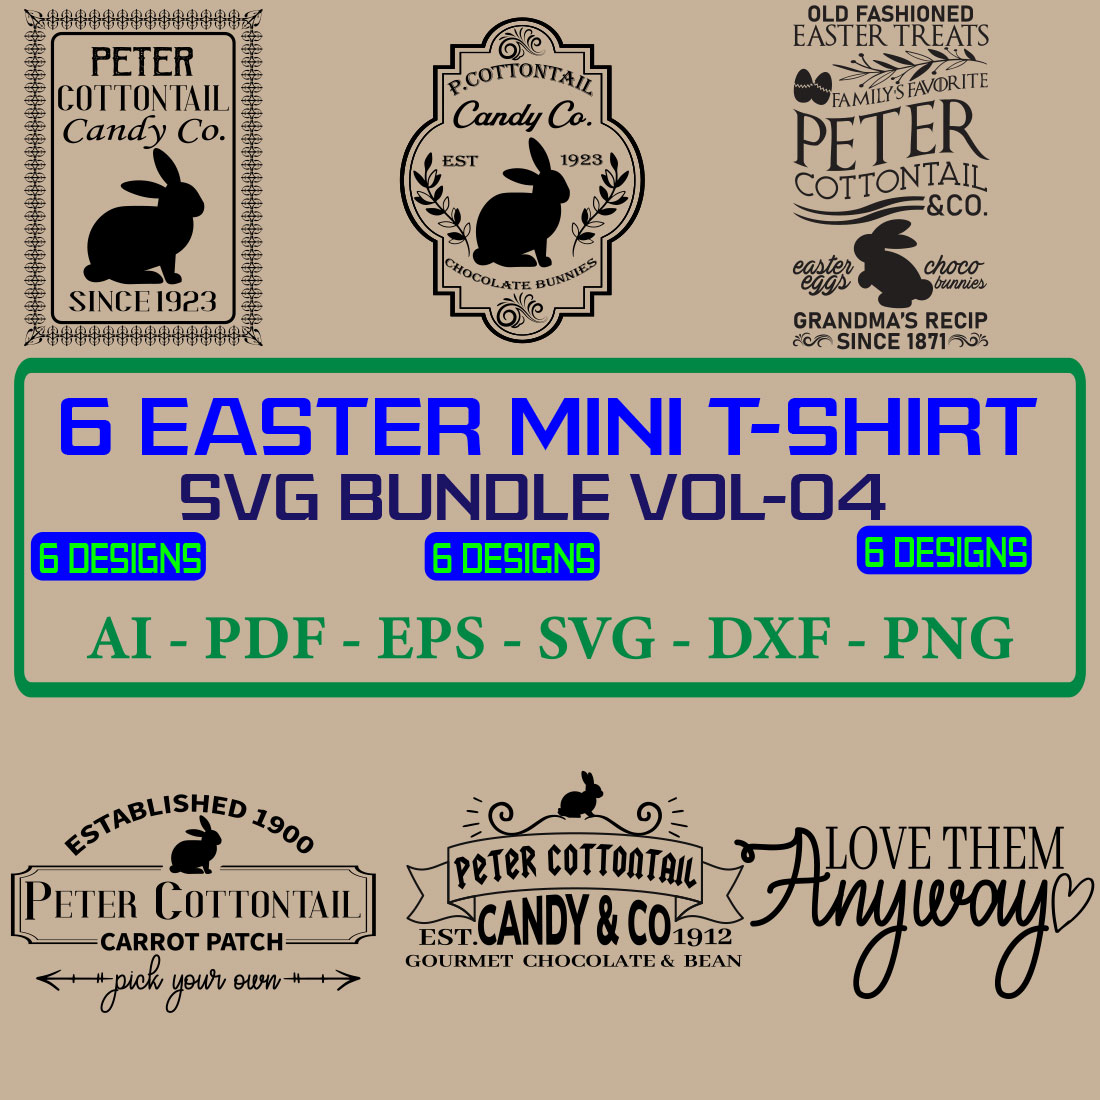 6 Easter Mini T-shirt SVG Bundle Vol 04 cover image.